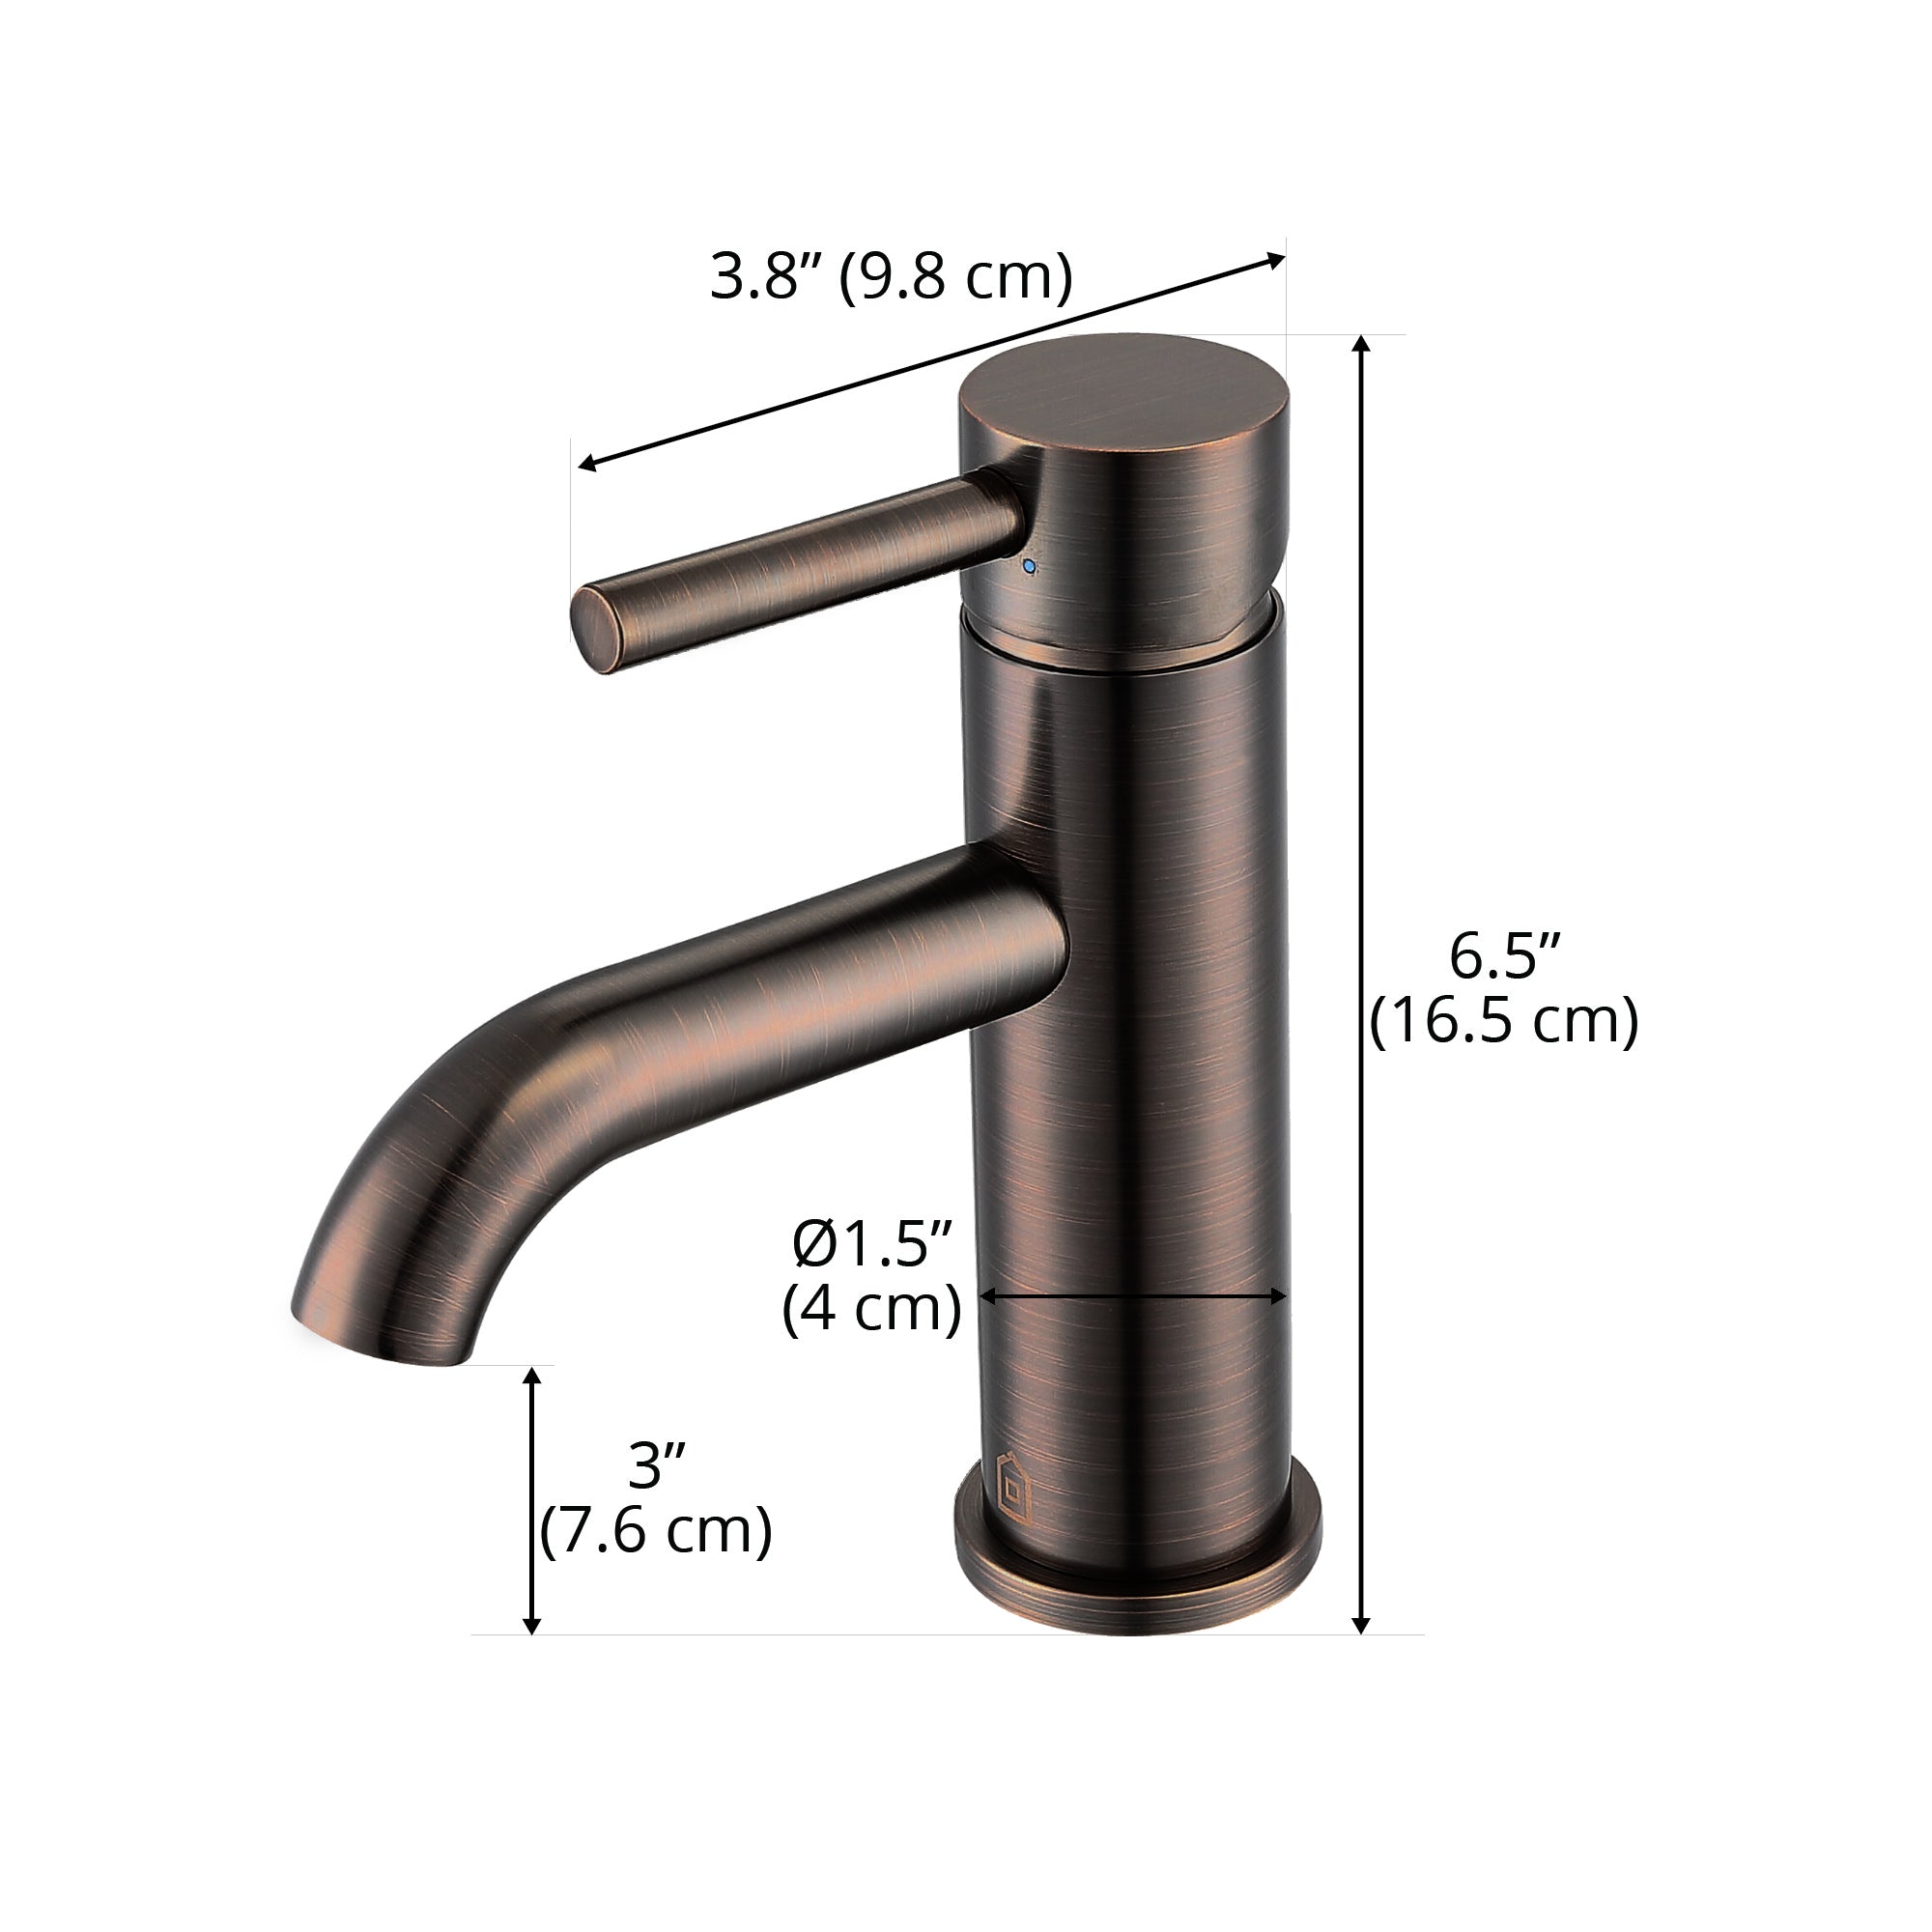 Ancona Valencia Single Handle Bathroom Faucet in Oil Rubbed Bronze